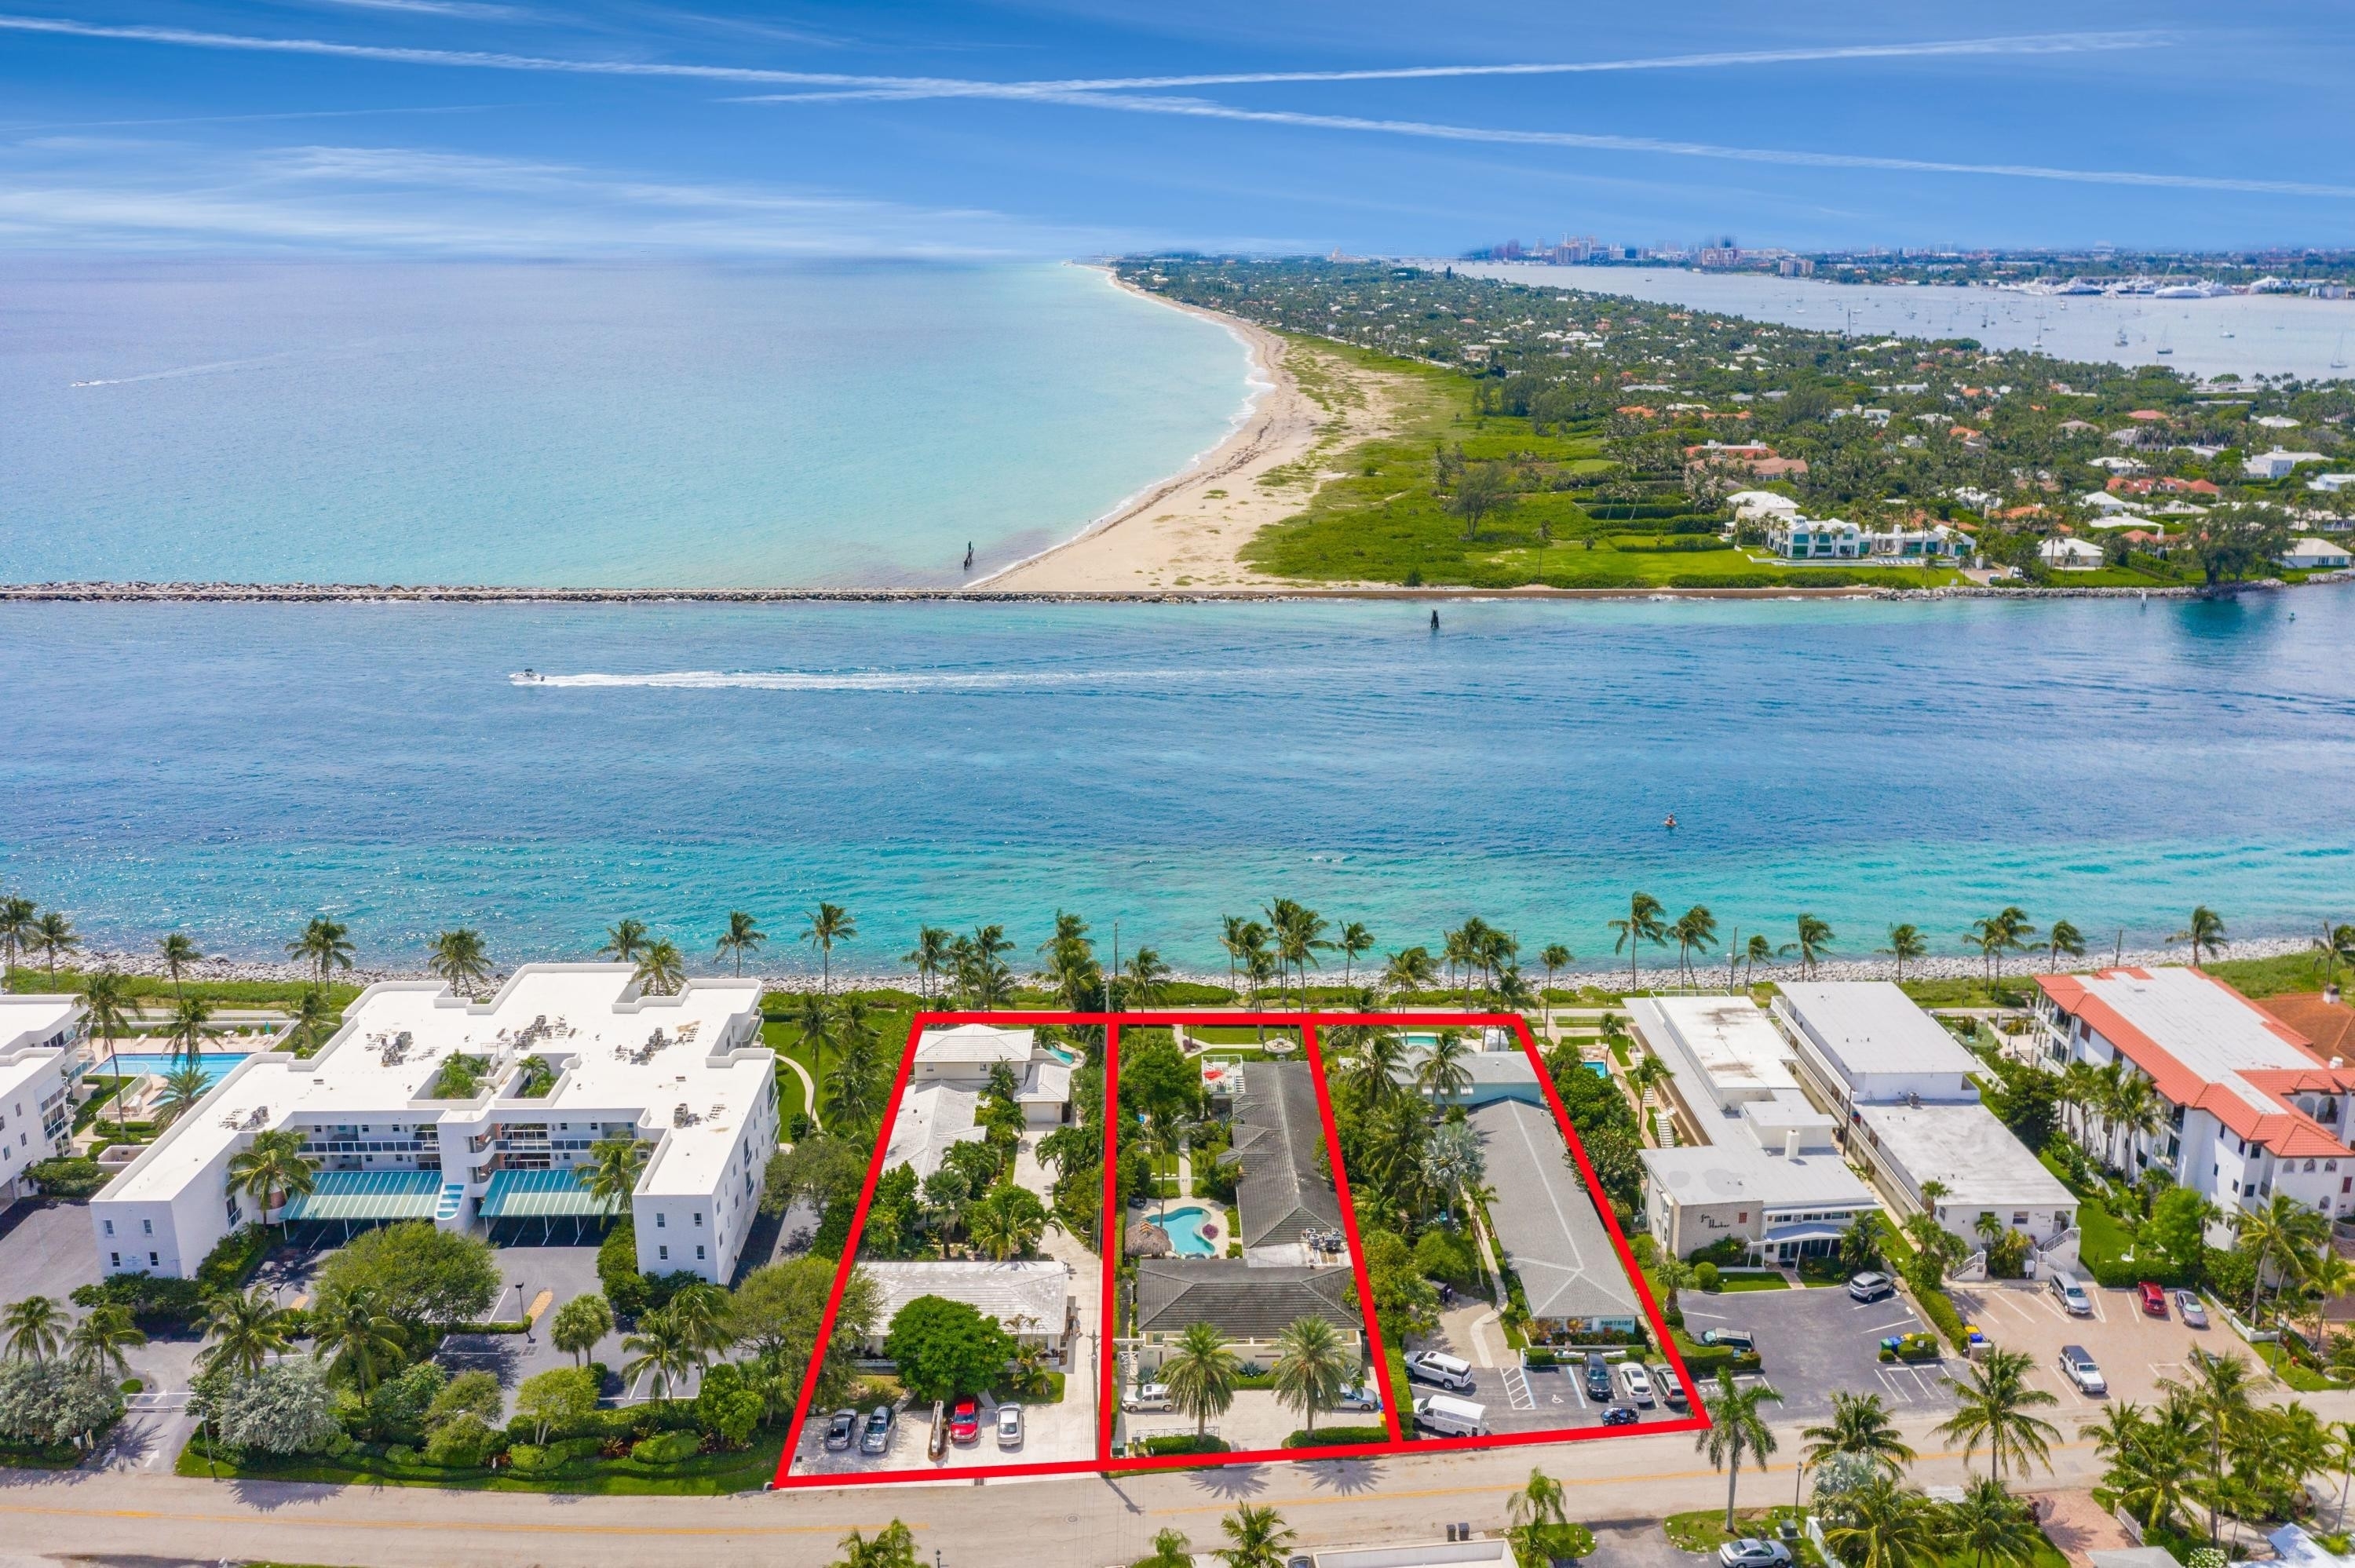 Condominium for Sale at 150 Inlet Way, 1e Palm Beach Shores, FL 33404